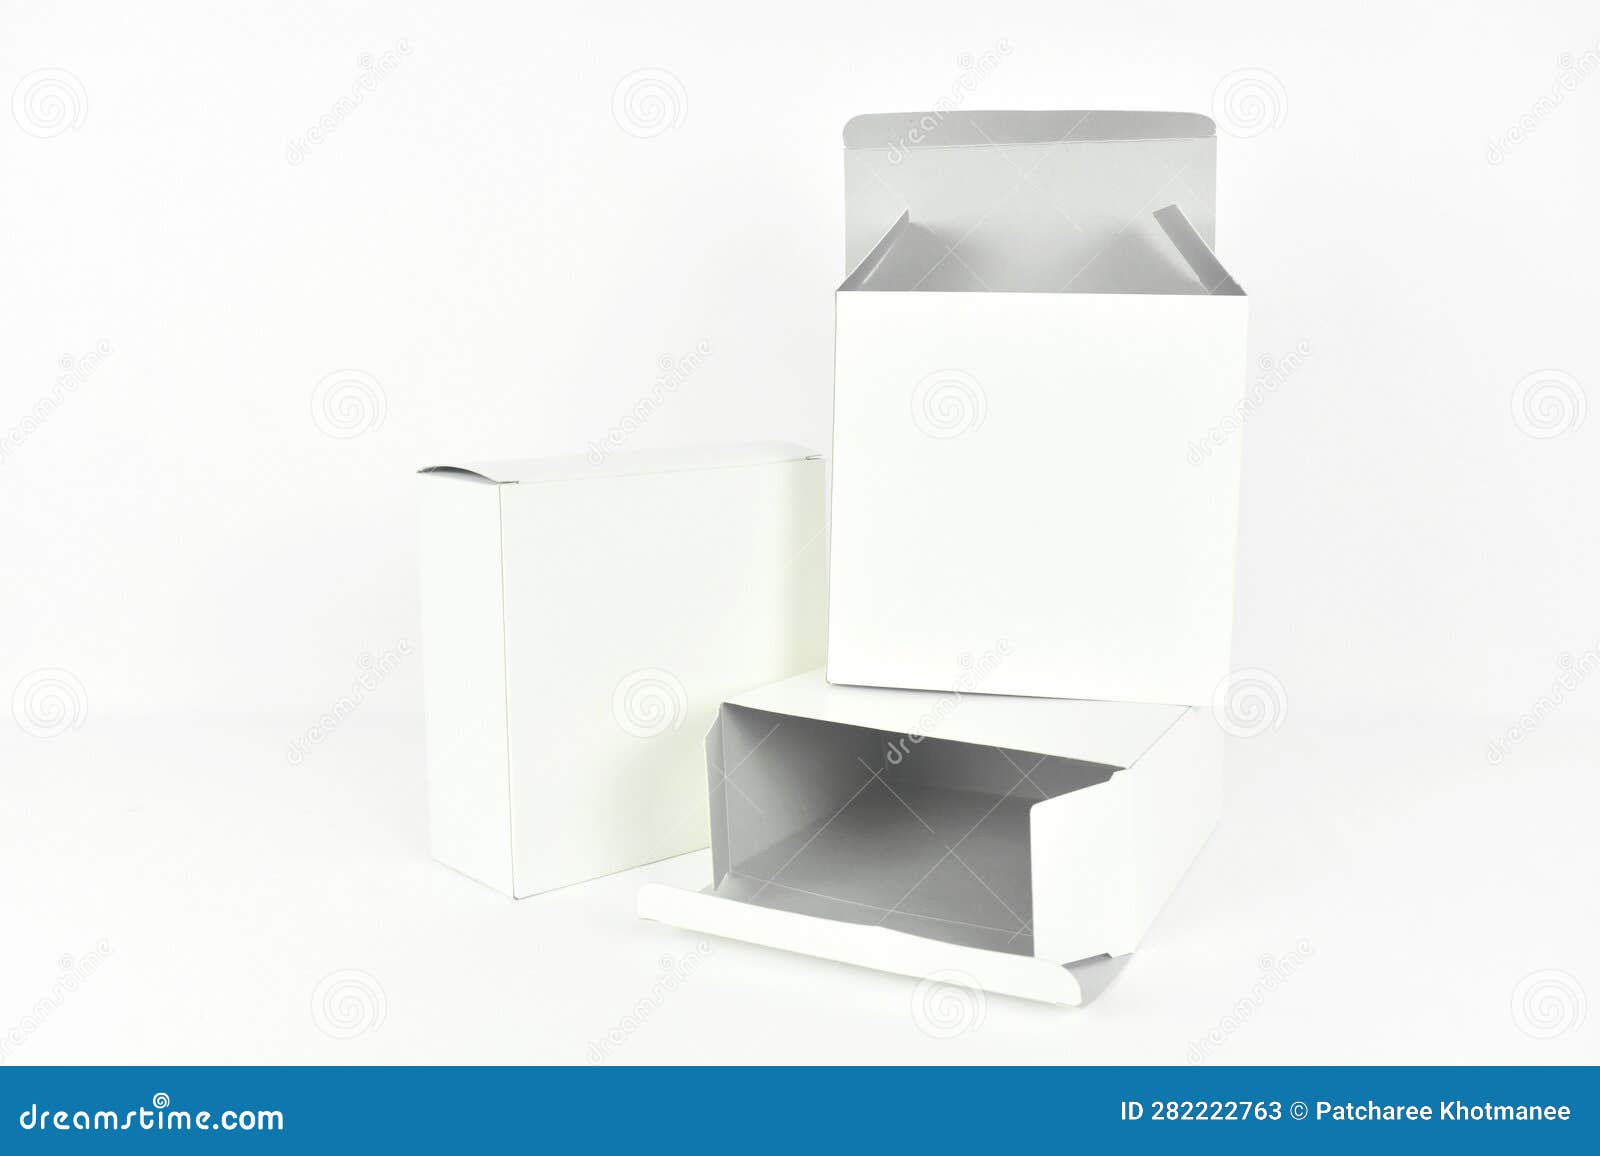 White Box Packaging Set on White Background Stock Image - Image of ...